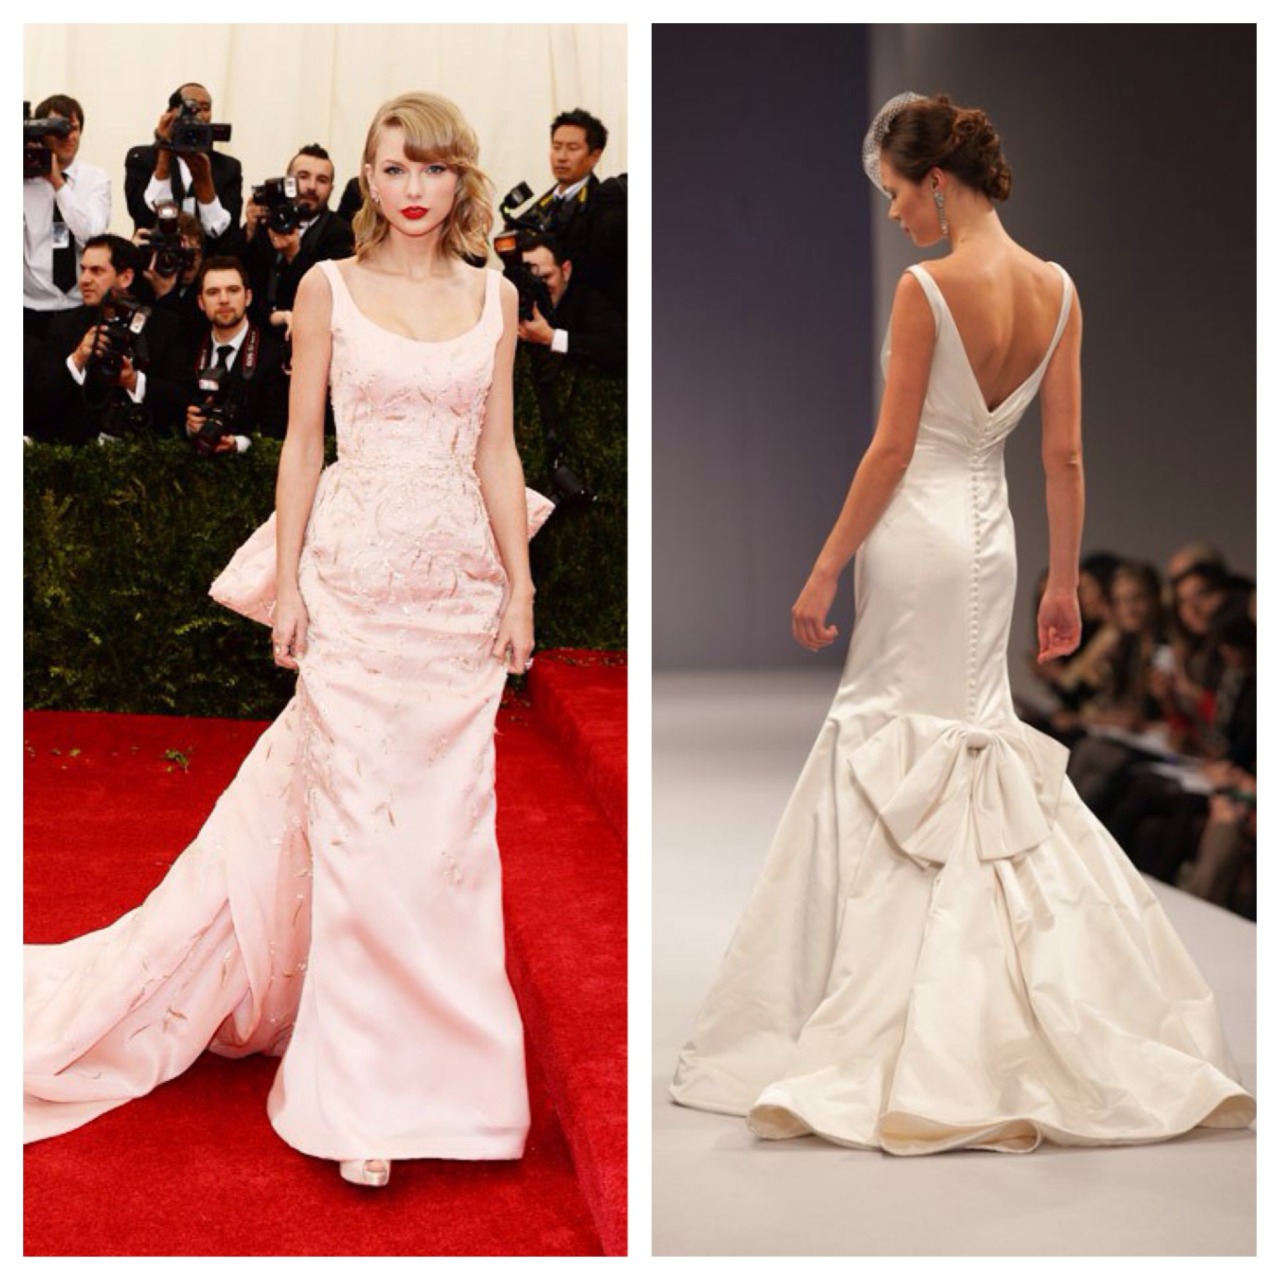 Met Gala Dresses Bridal Version
Taylor Swift got to wear her “dream” designer at the Met Gala looking fabulous in Oscar de la Renta. This Anne Barge Chantal wedding dress is our bridal version.